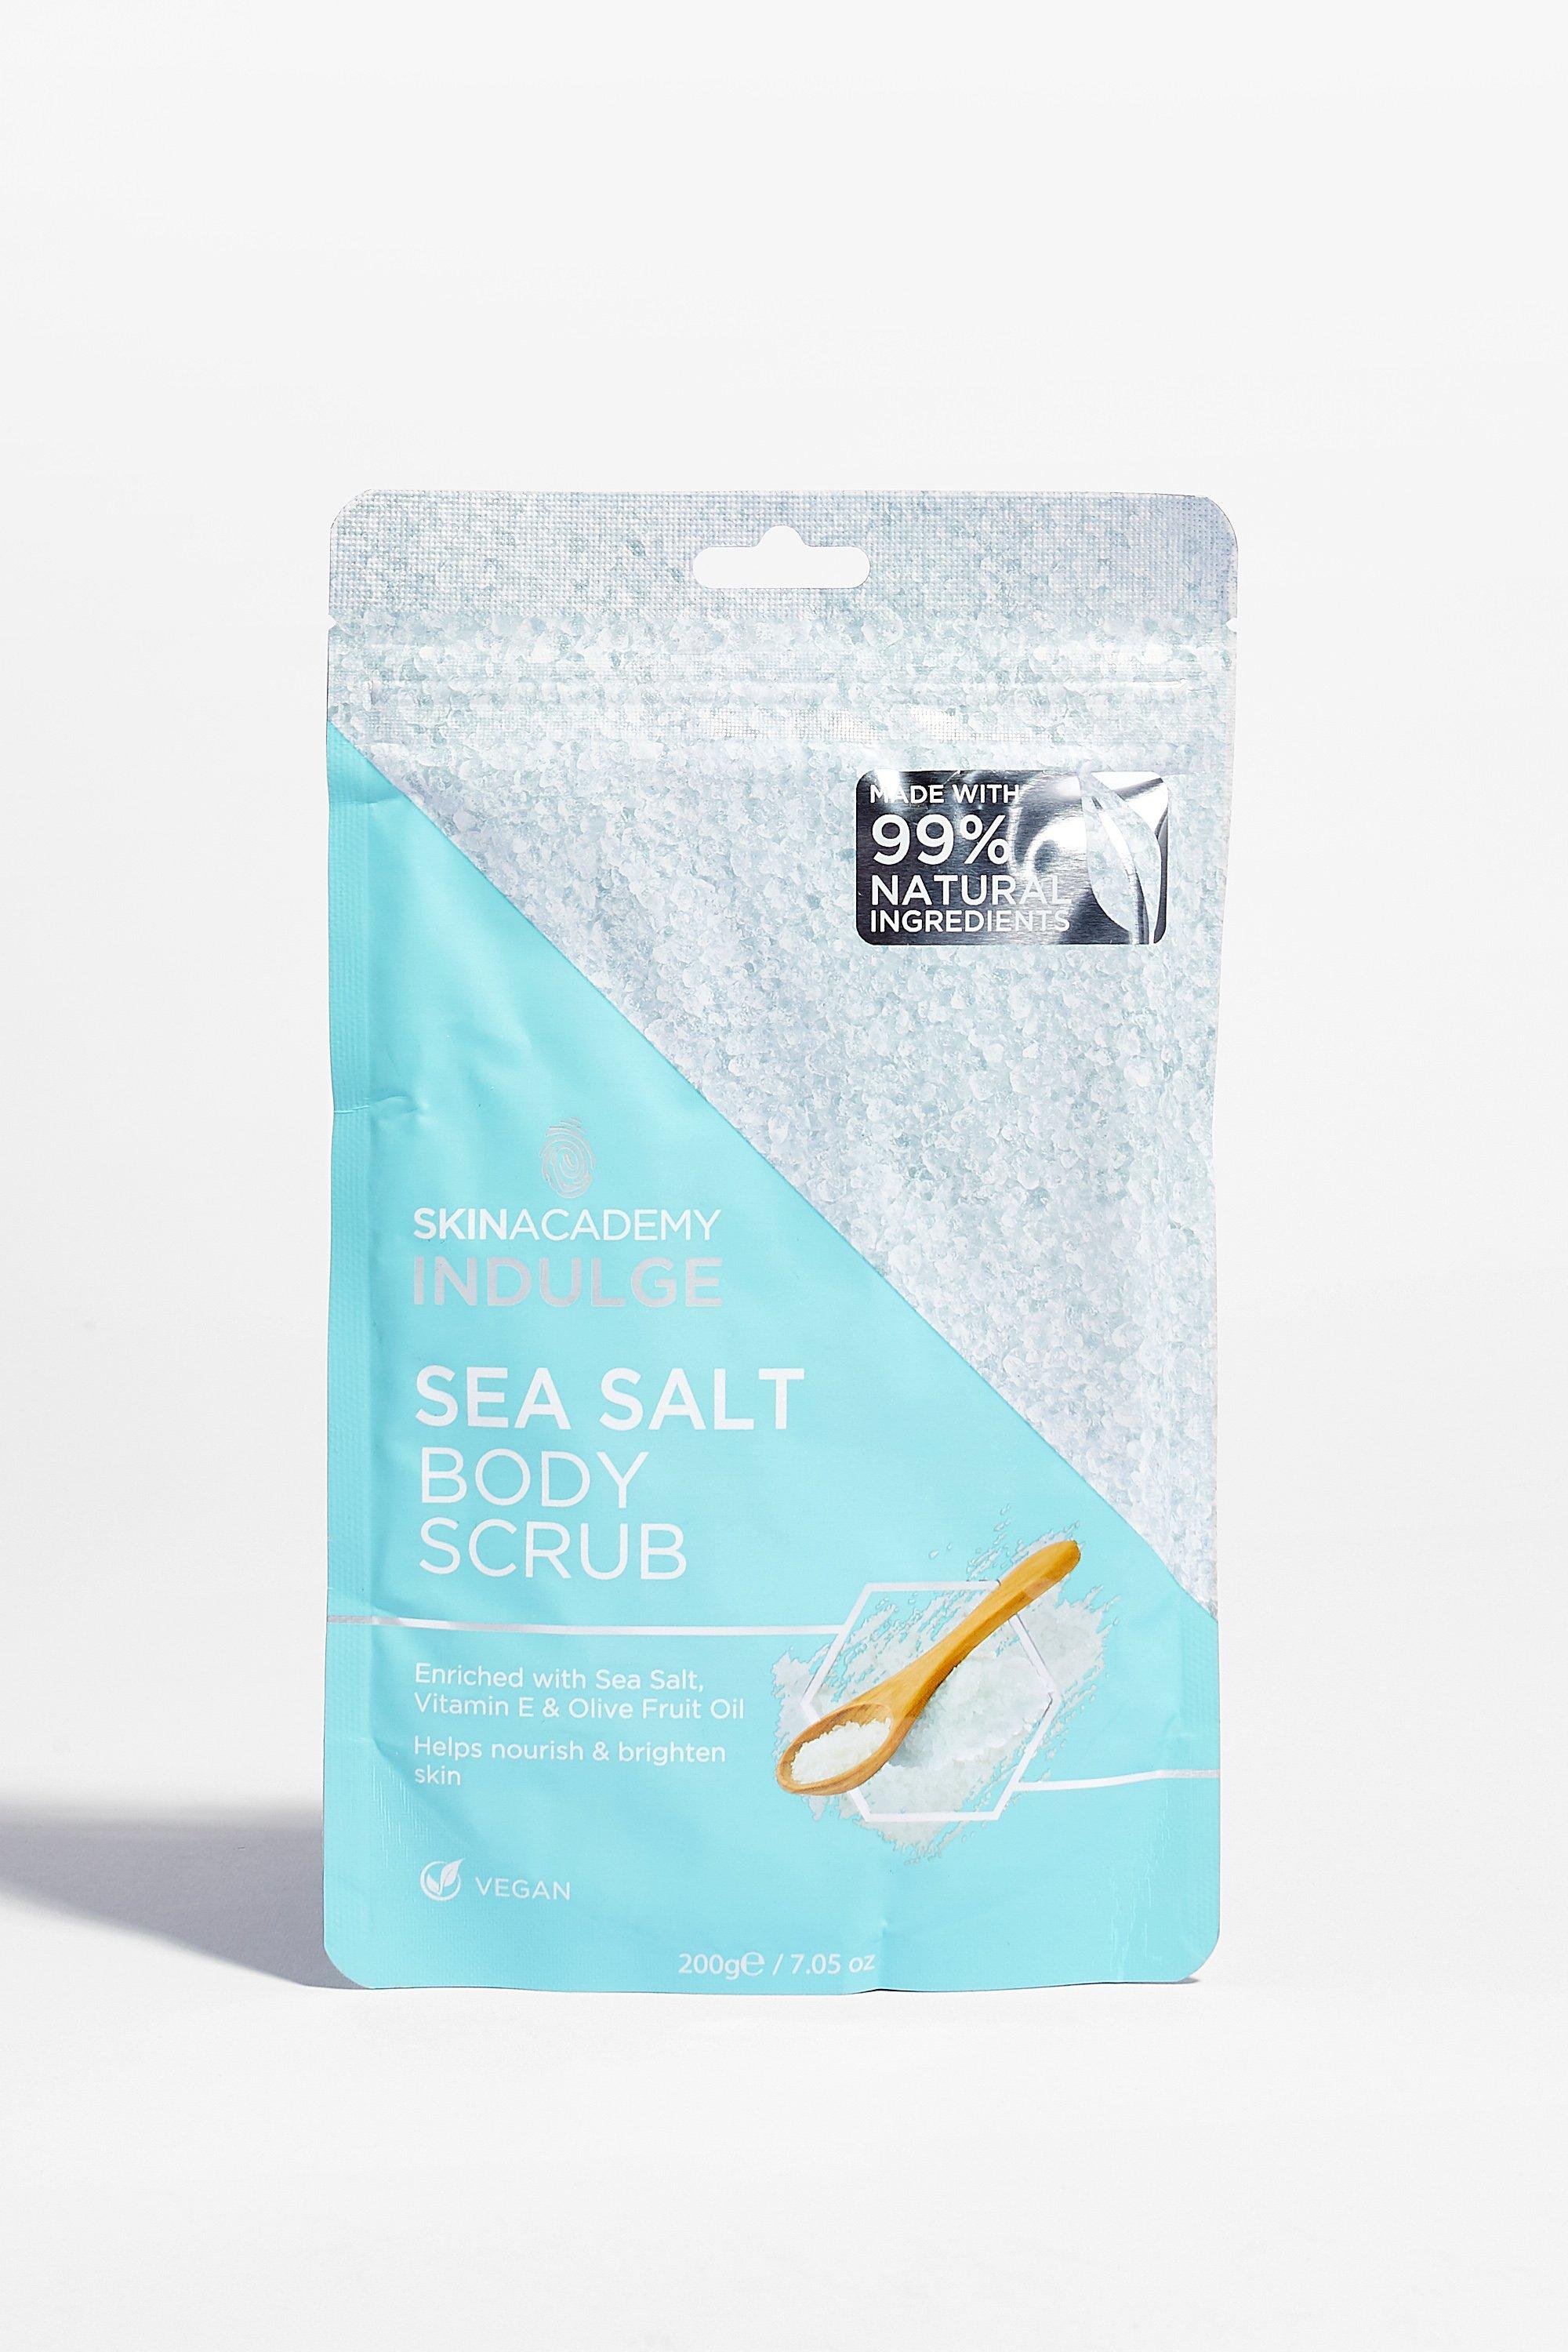 Skin Academy Sea Salt Body Scrub